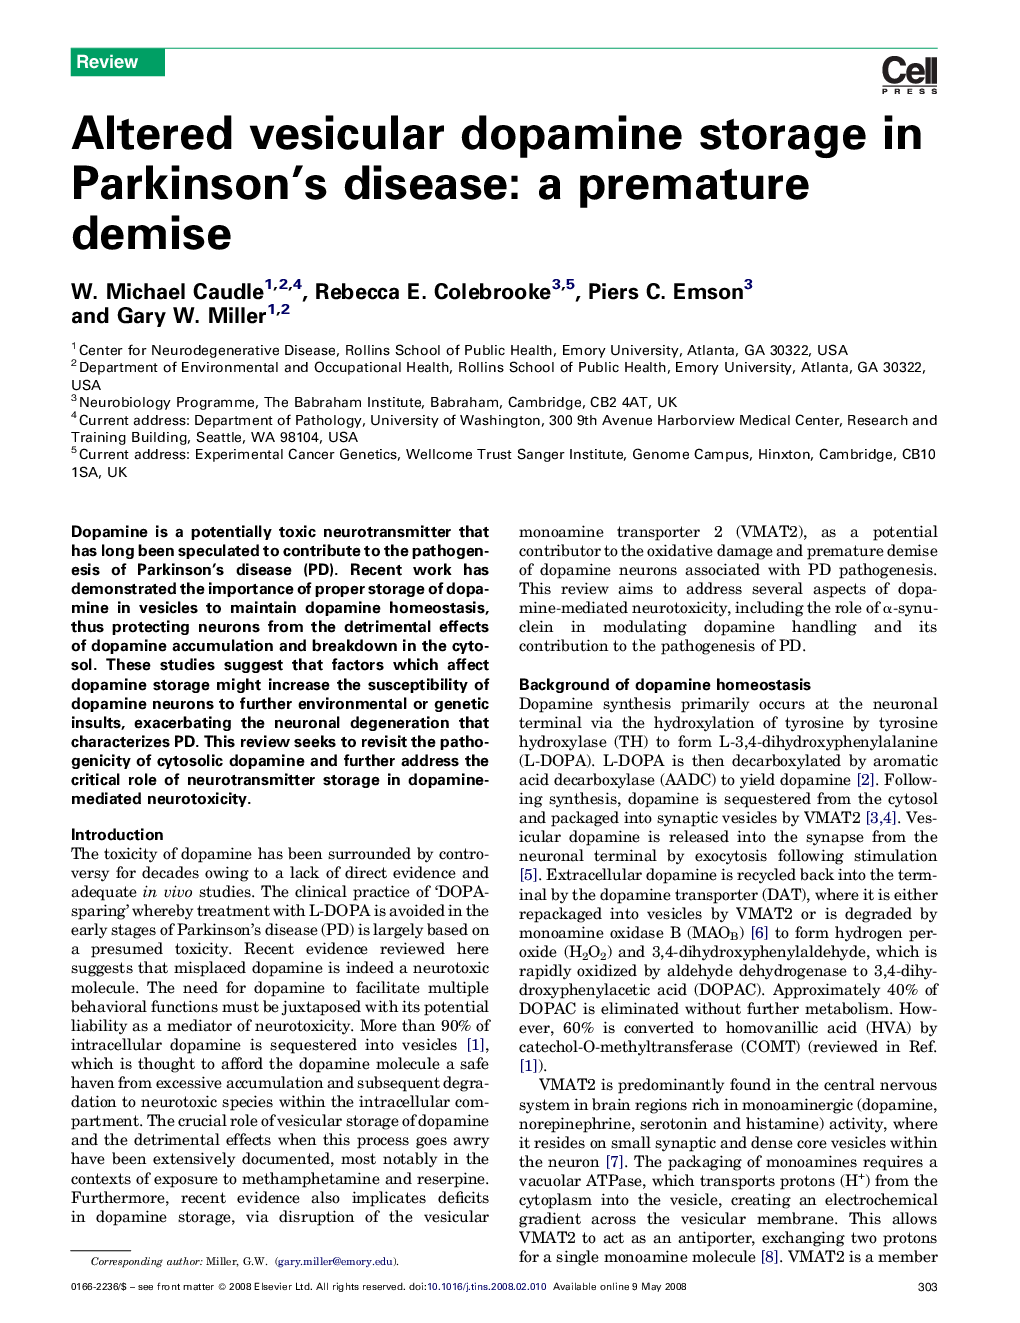 Altered vesicular dopamine storage in Parkinson's disease: a premature demise